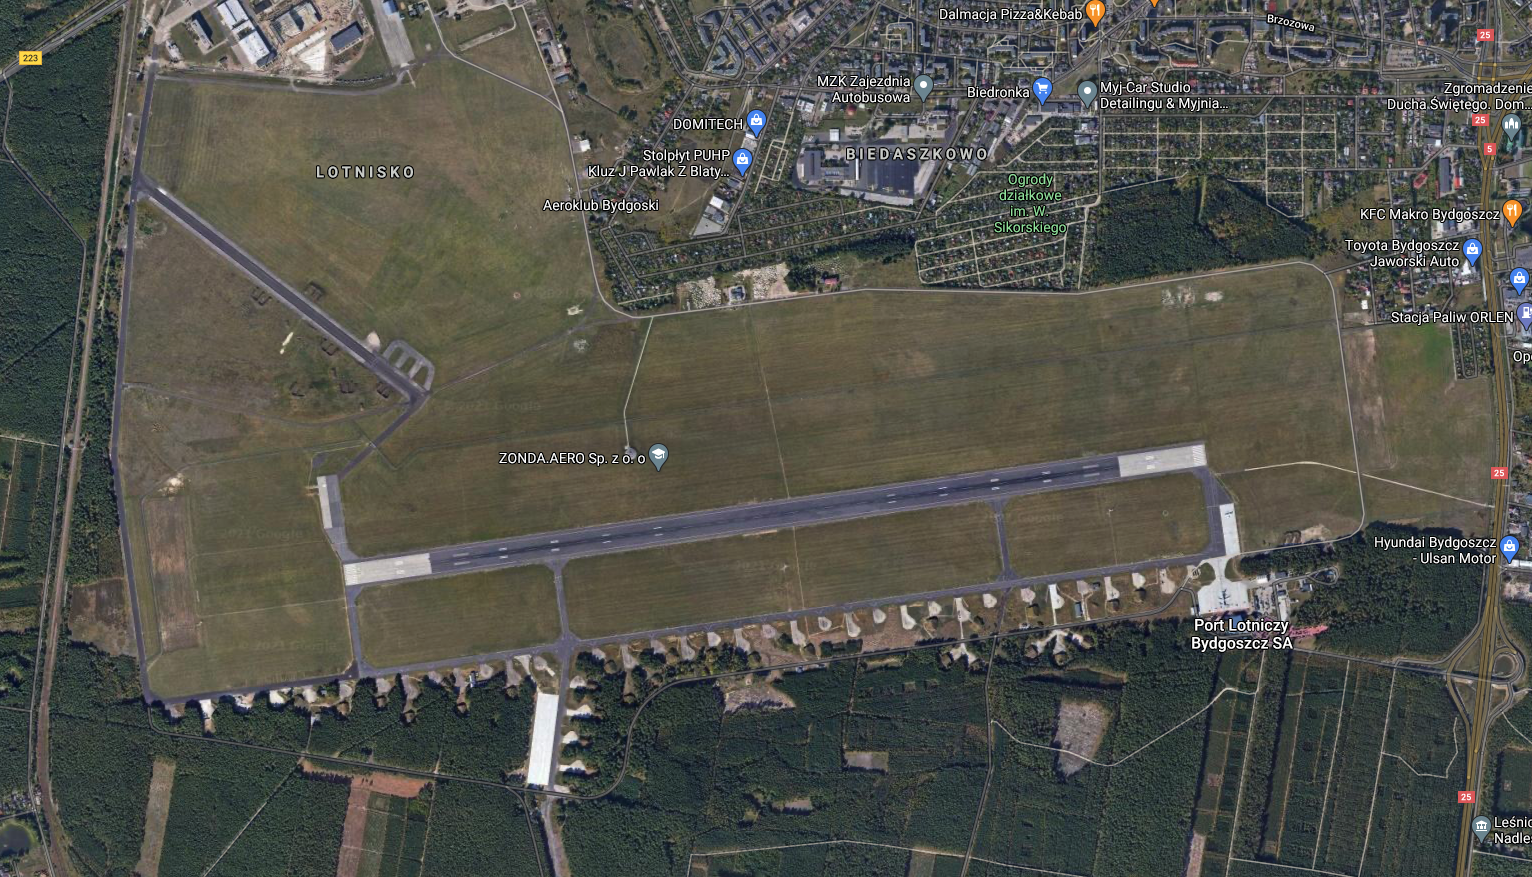 Bydgoszcz airport. 2013 year. Google photo